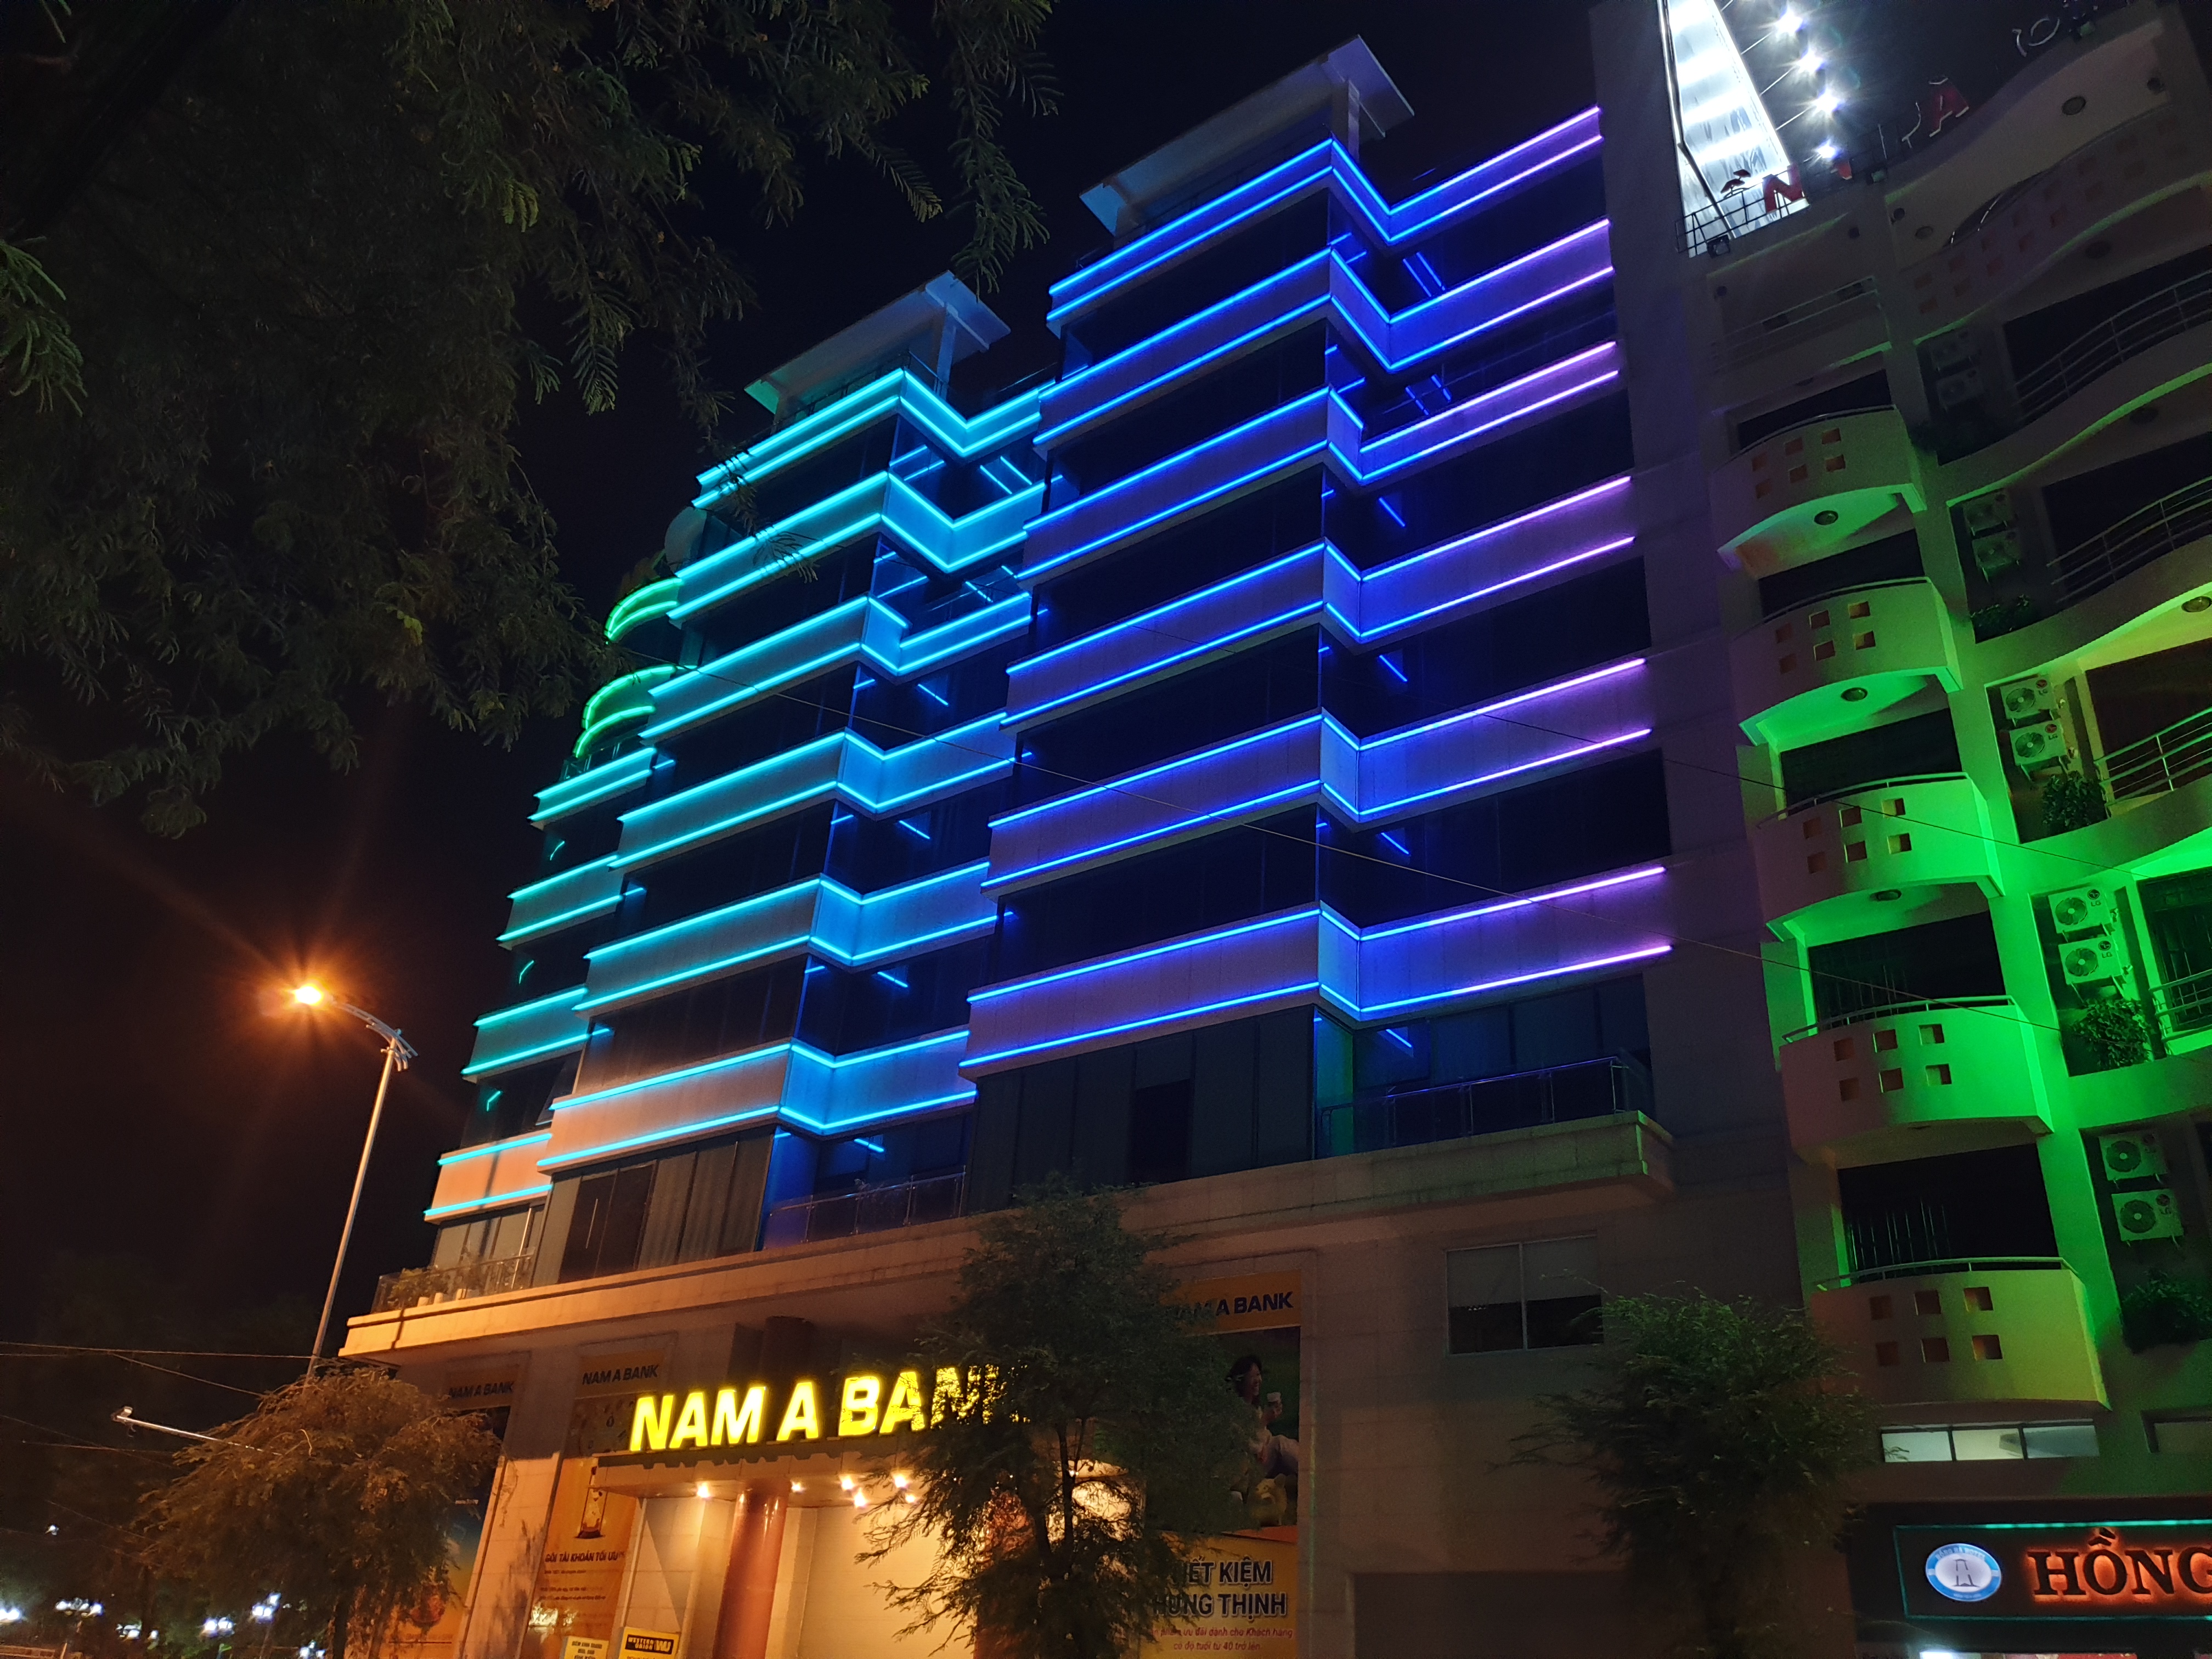 Nam A Bank bank building